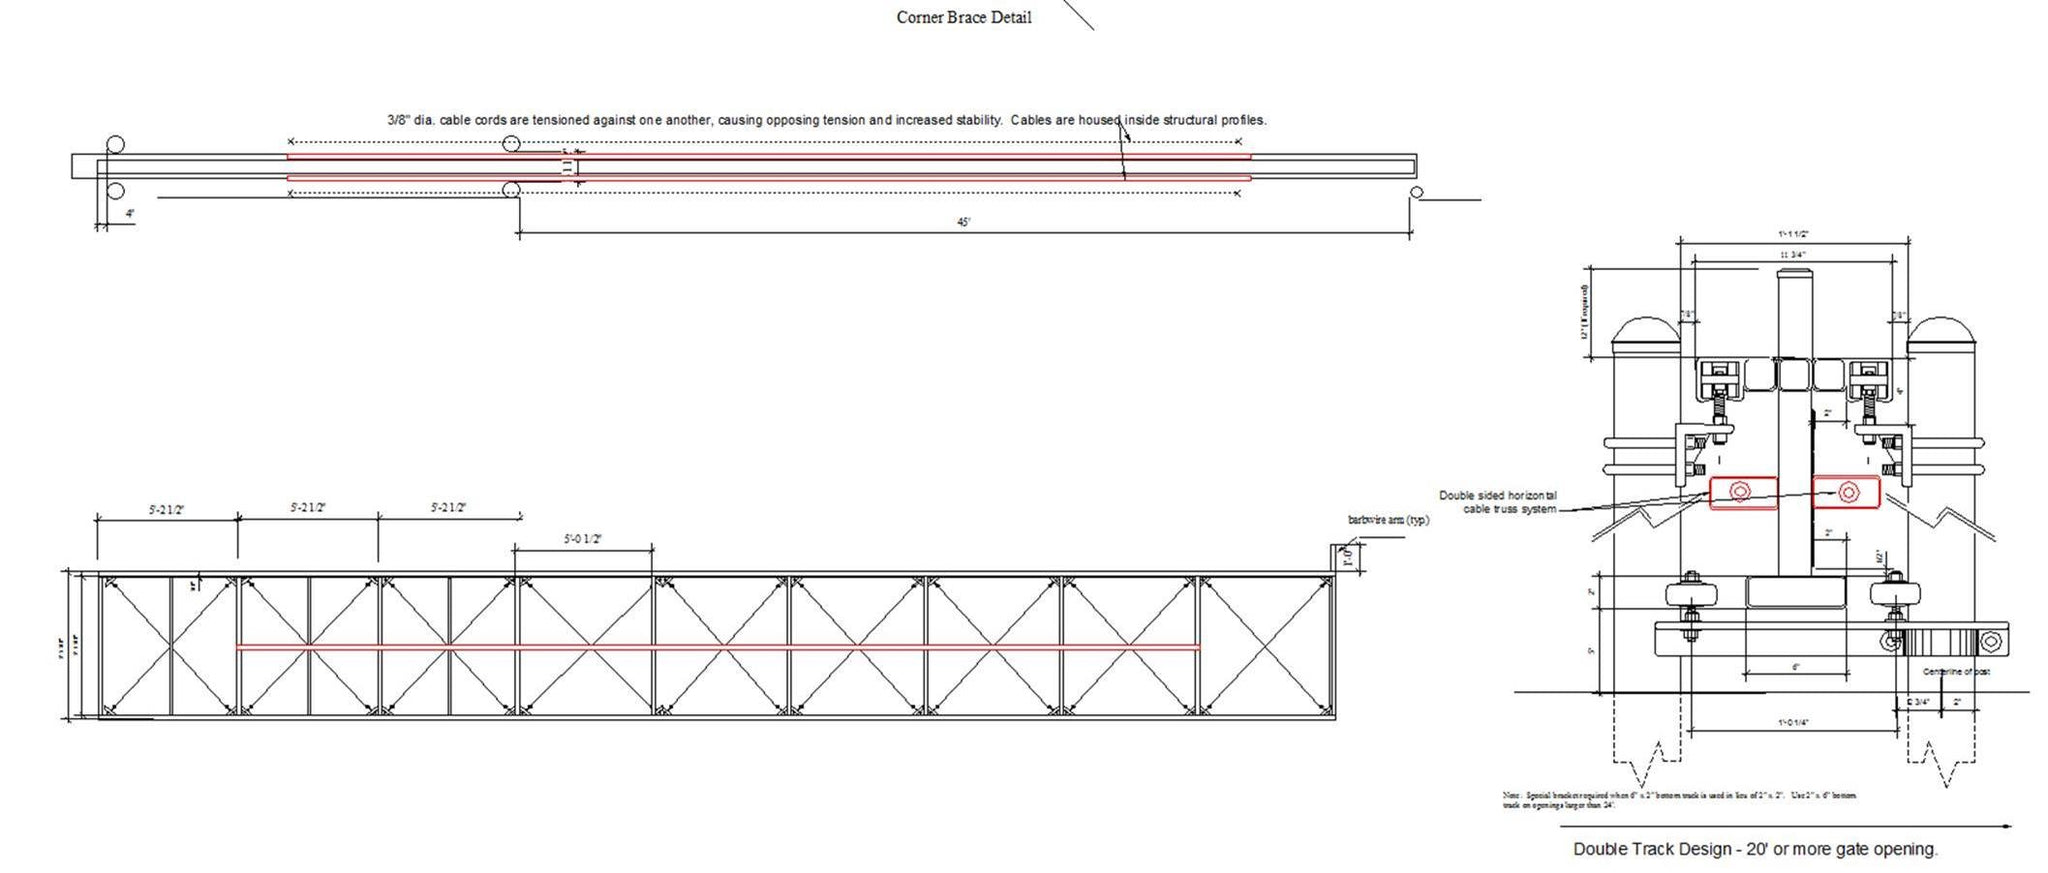 Corner brace detail for a horizontal cantilever truss system